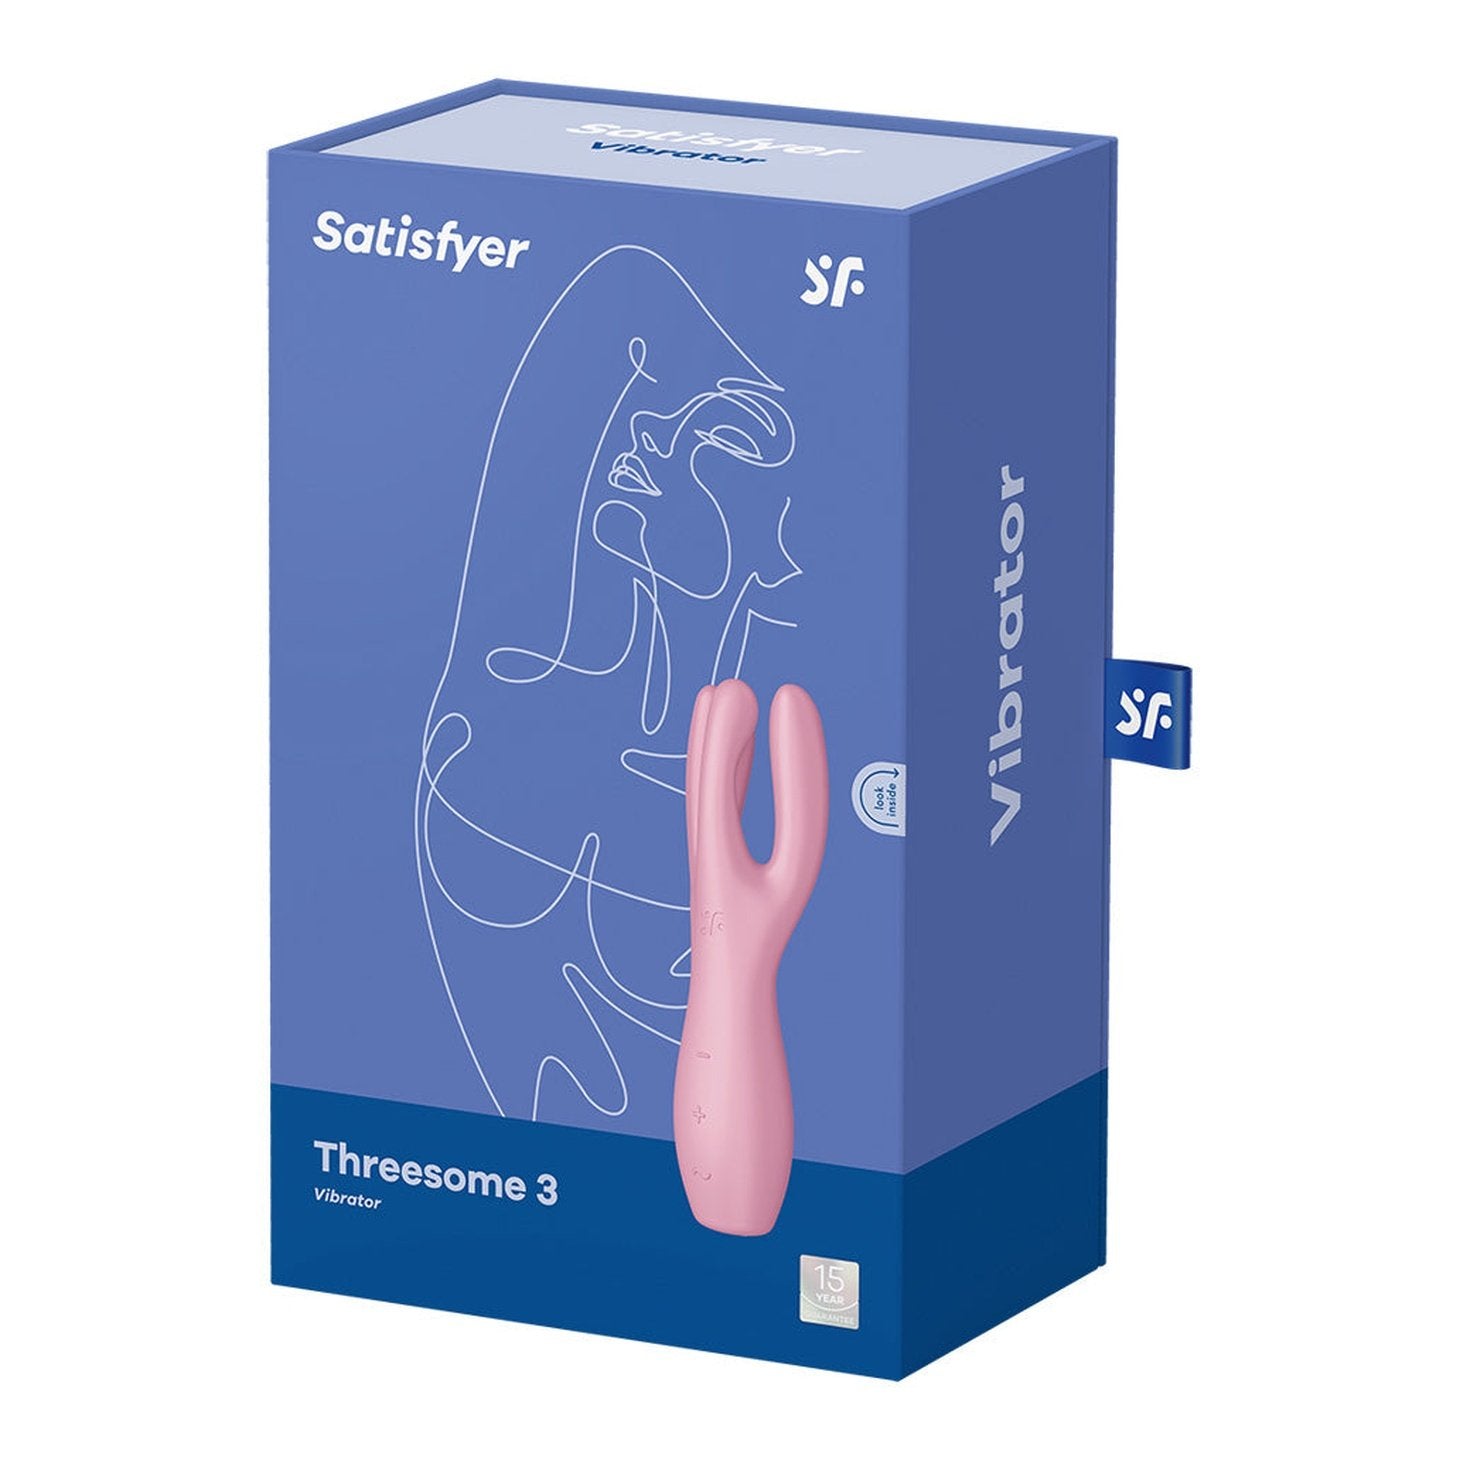 Threesome 3 Lay-on Vibrator - Pink